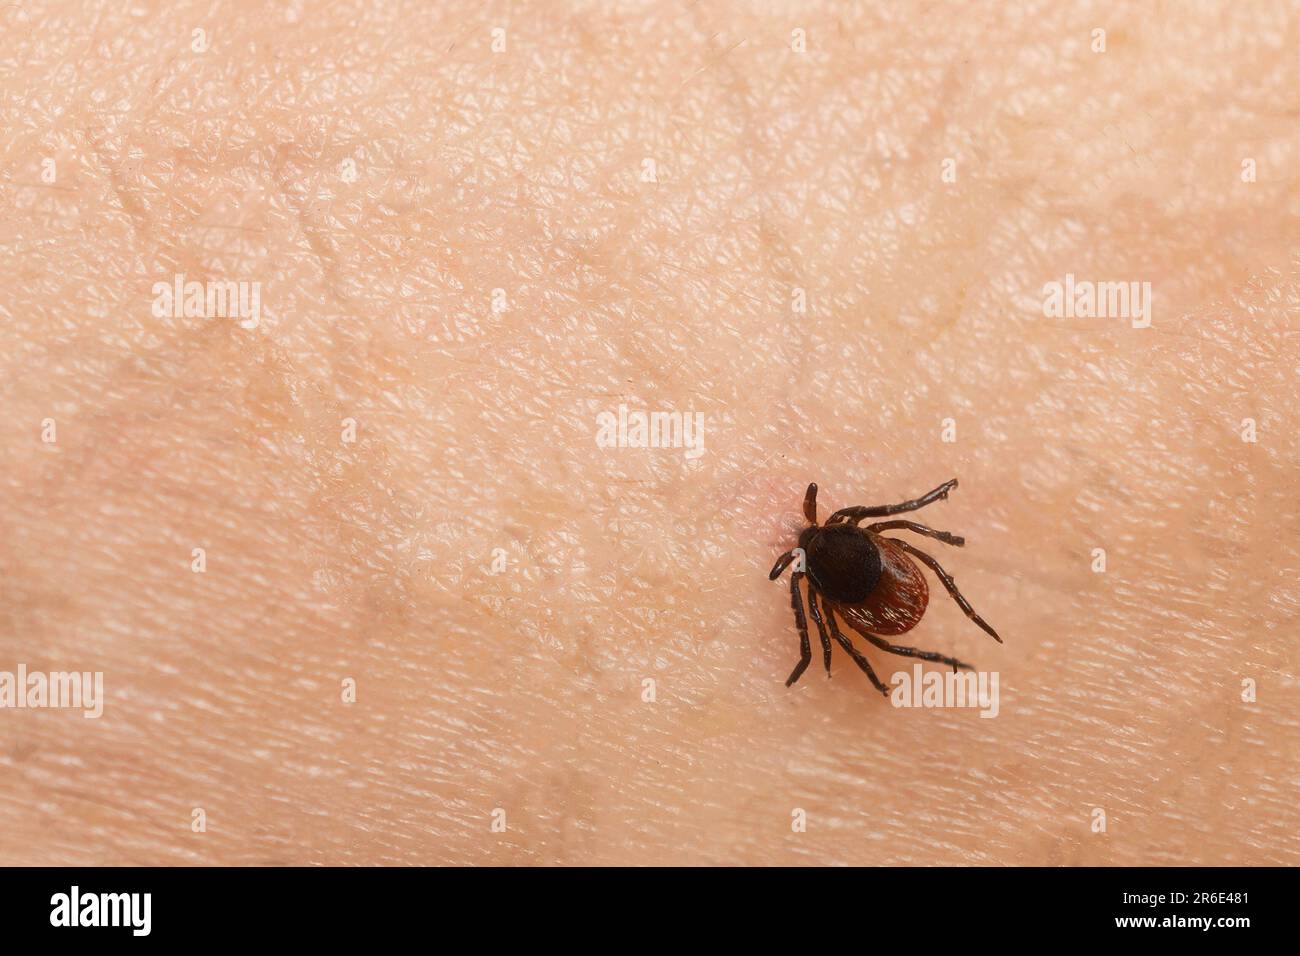 Tick bite on a person's skin Stock Photo